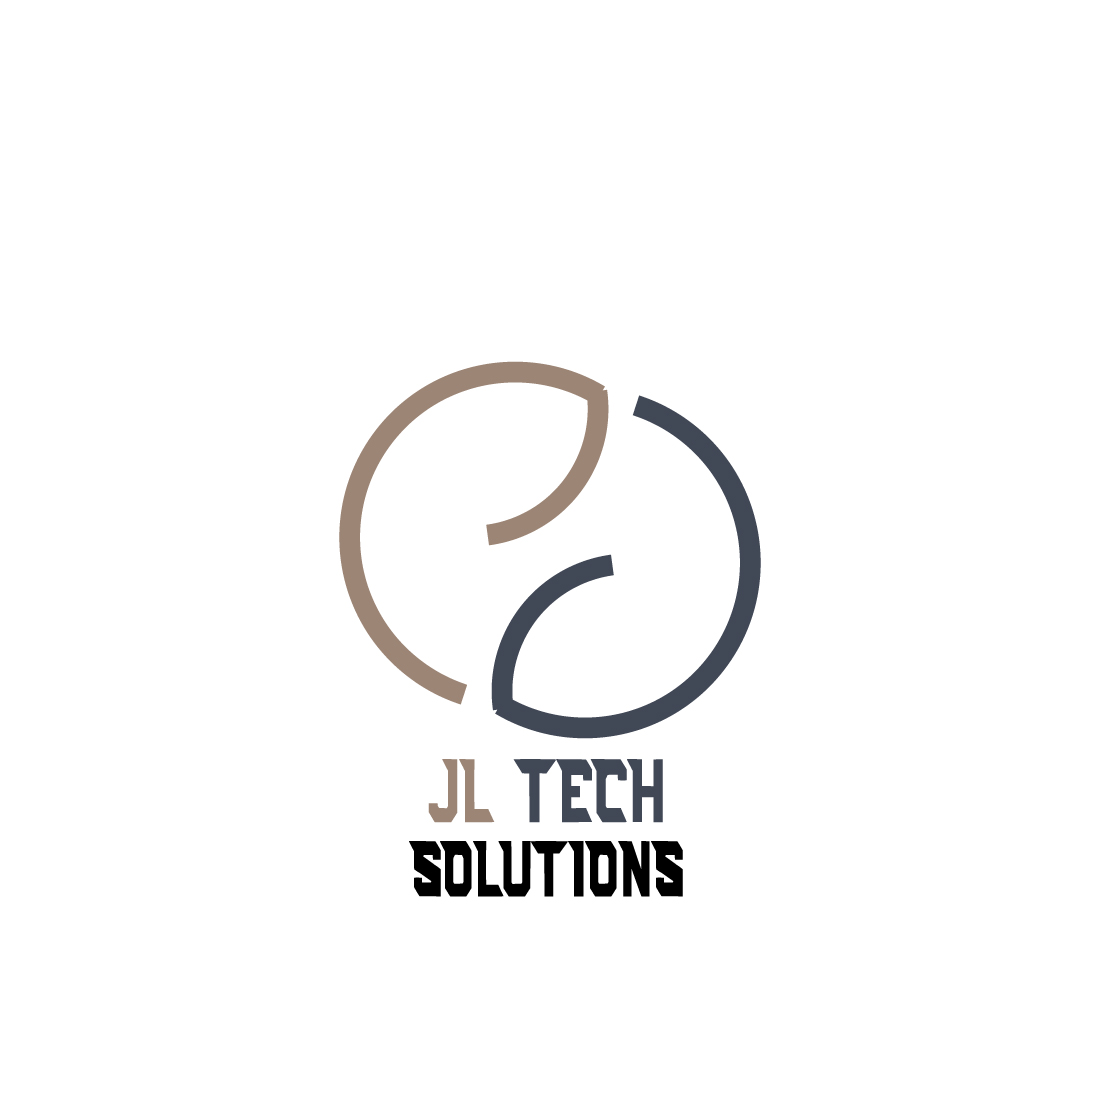 jl tech logo contest 2 454